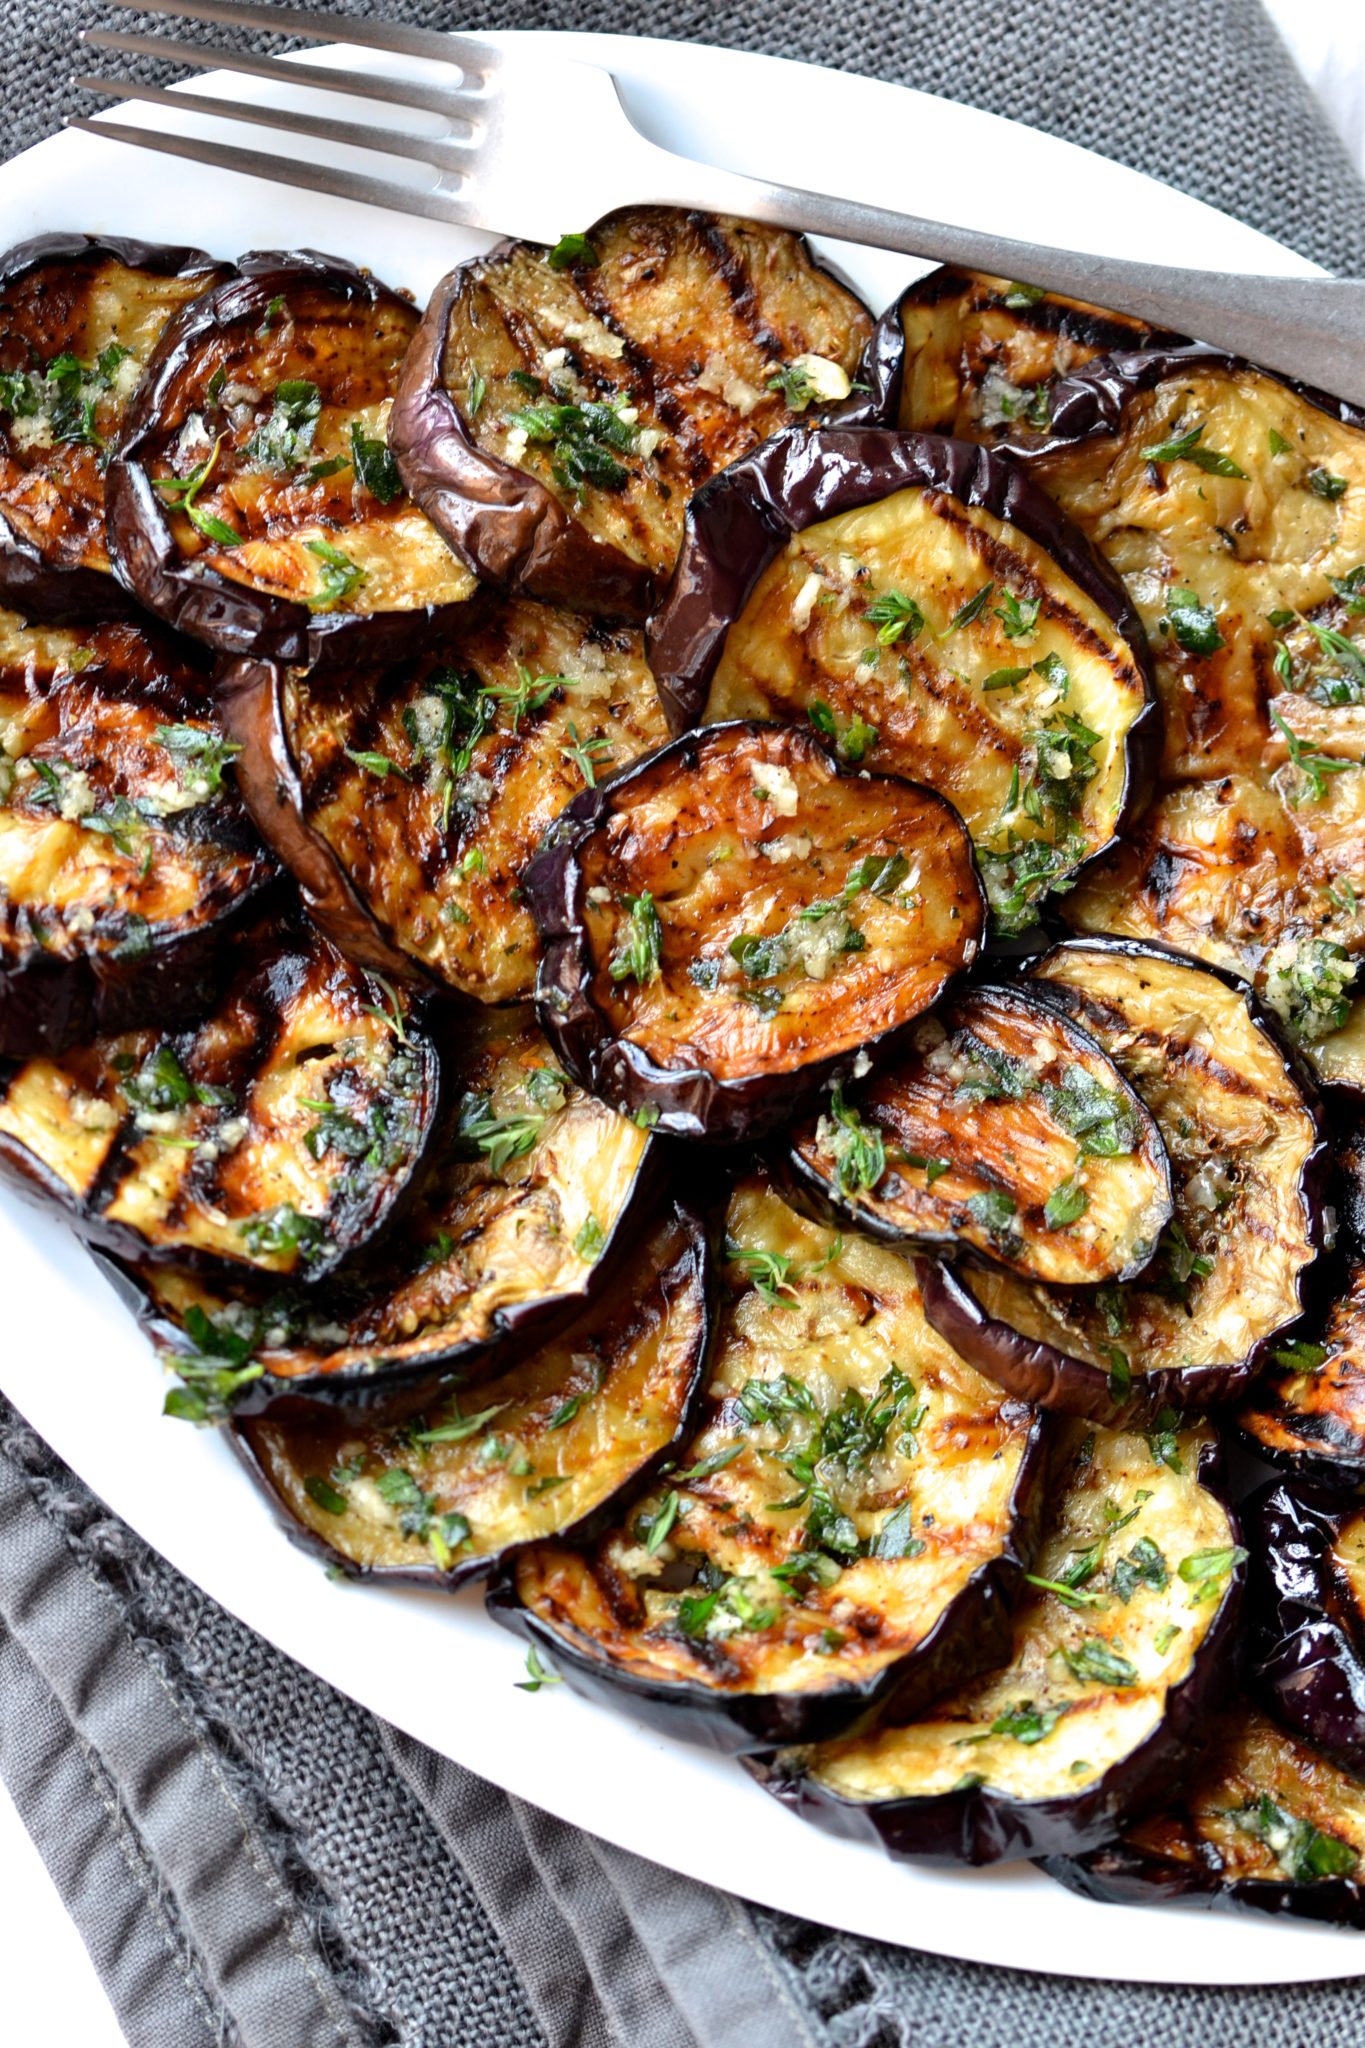 Top Grilled Eggplant Recipes